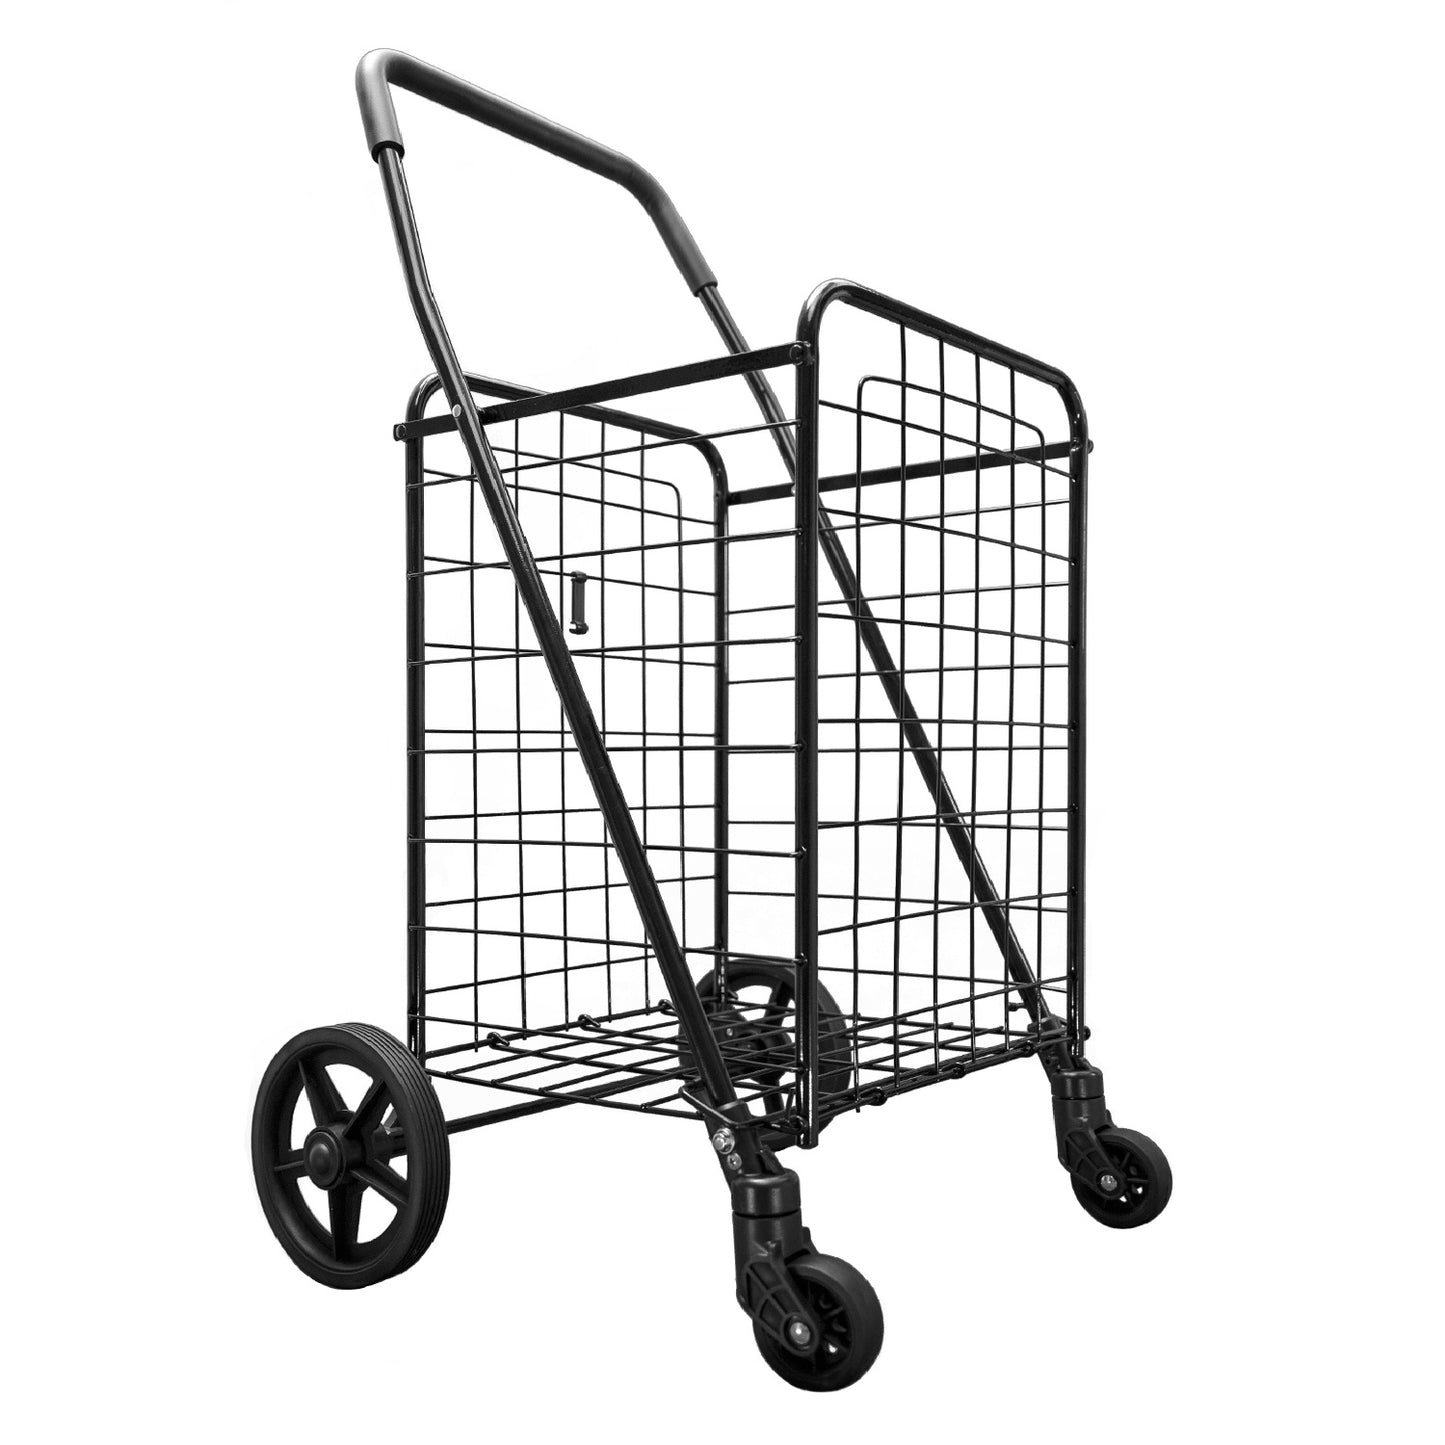 Folding Shopping Cart with Patent Pending Swivel Wheels and Single Basket, Medium Black S-2142